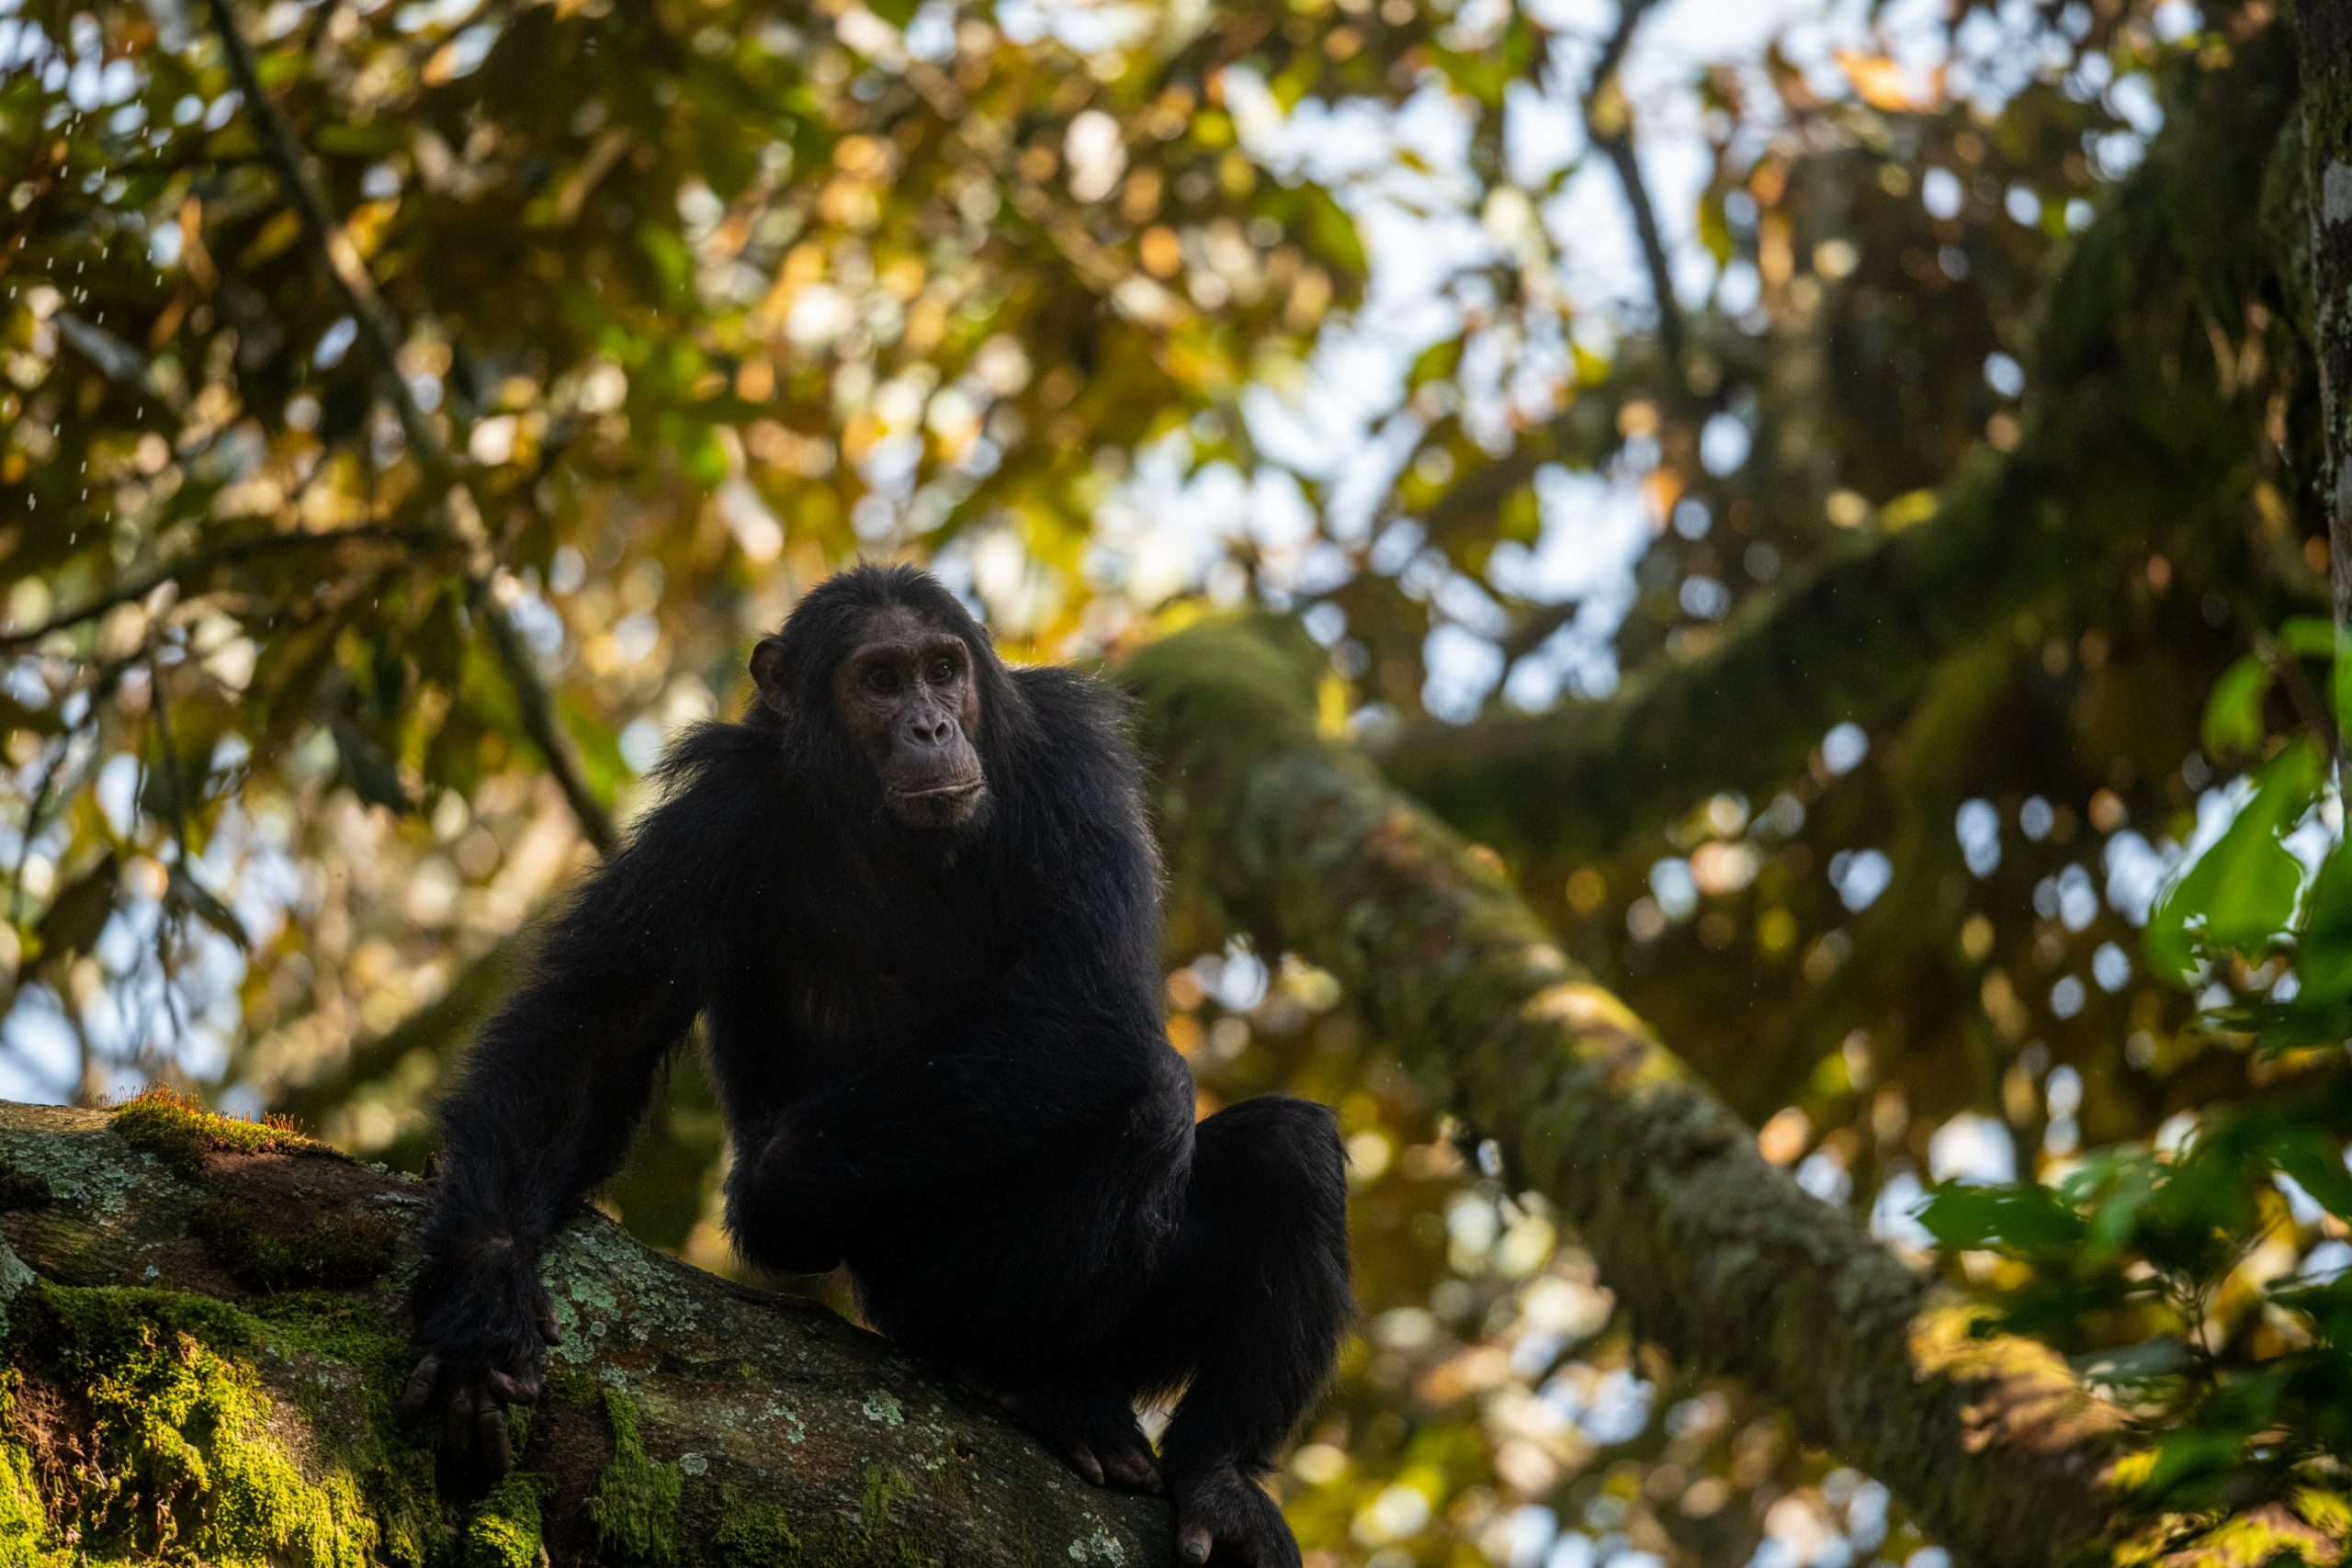 Purchasing Your Chimpanzee Permit In Rwanda